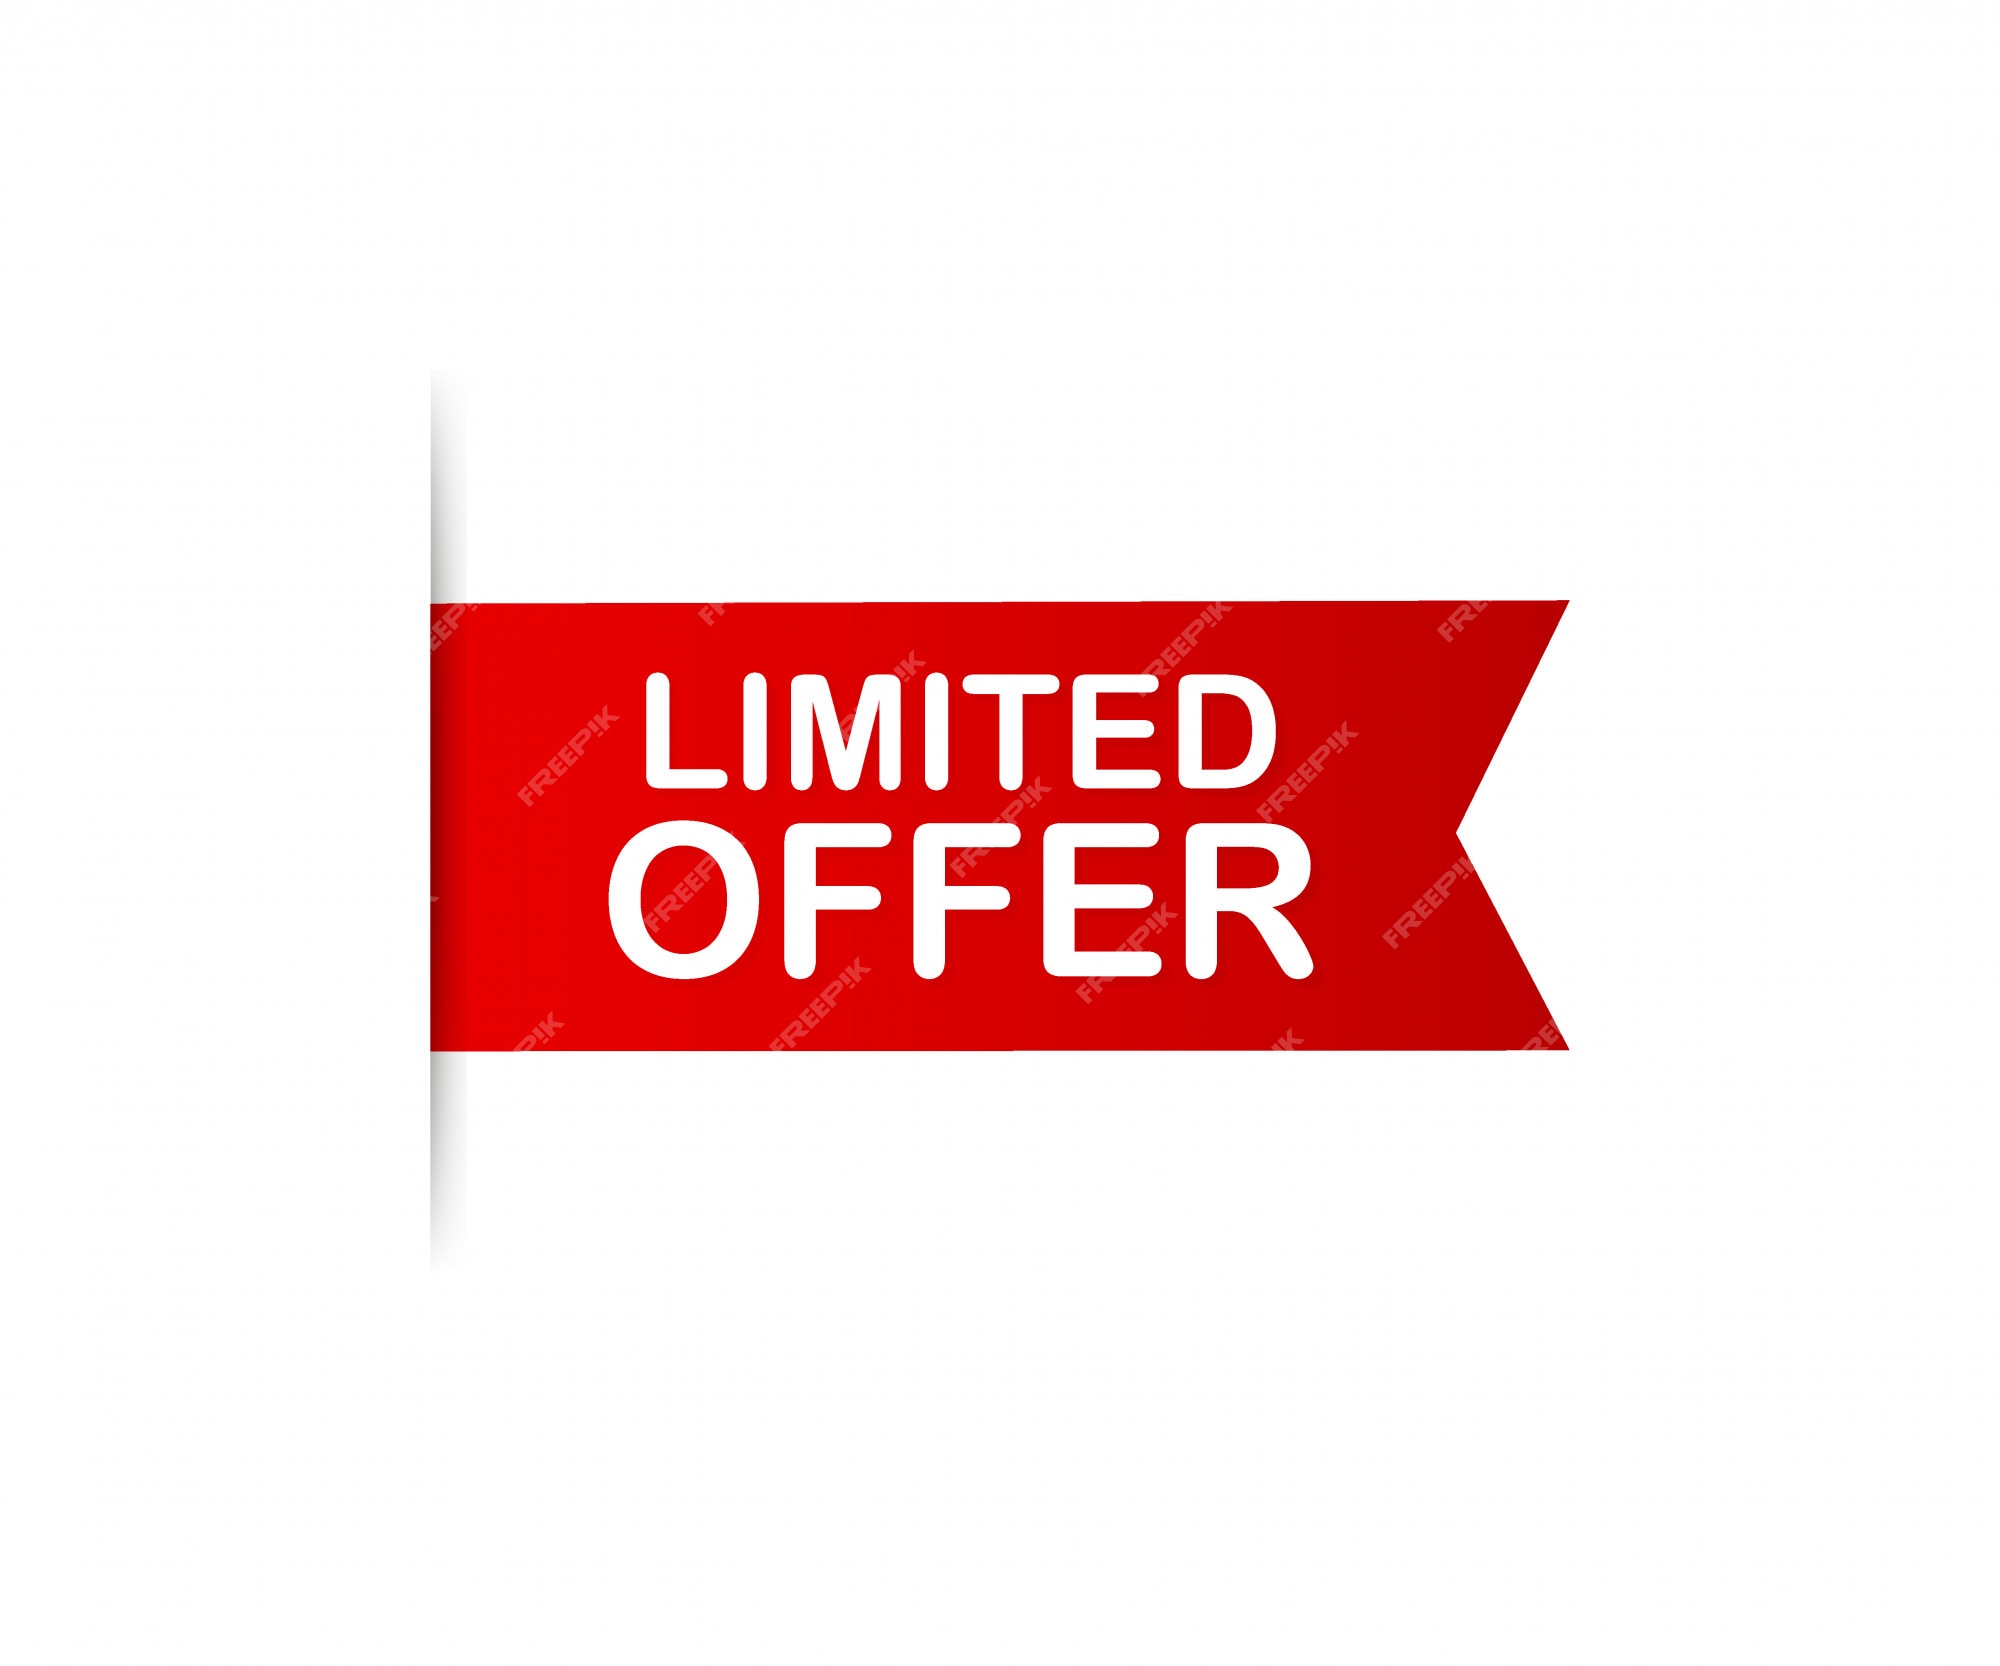 Limit offer. Limited offer. Limited offer banner. Limited banner.